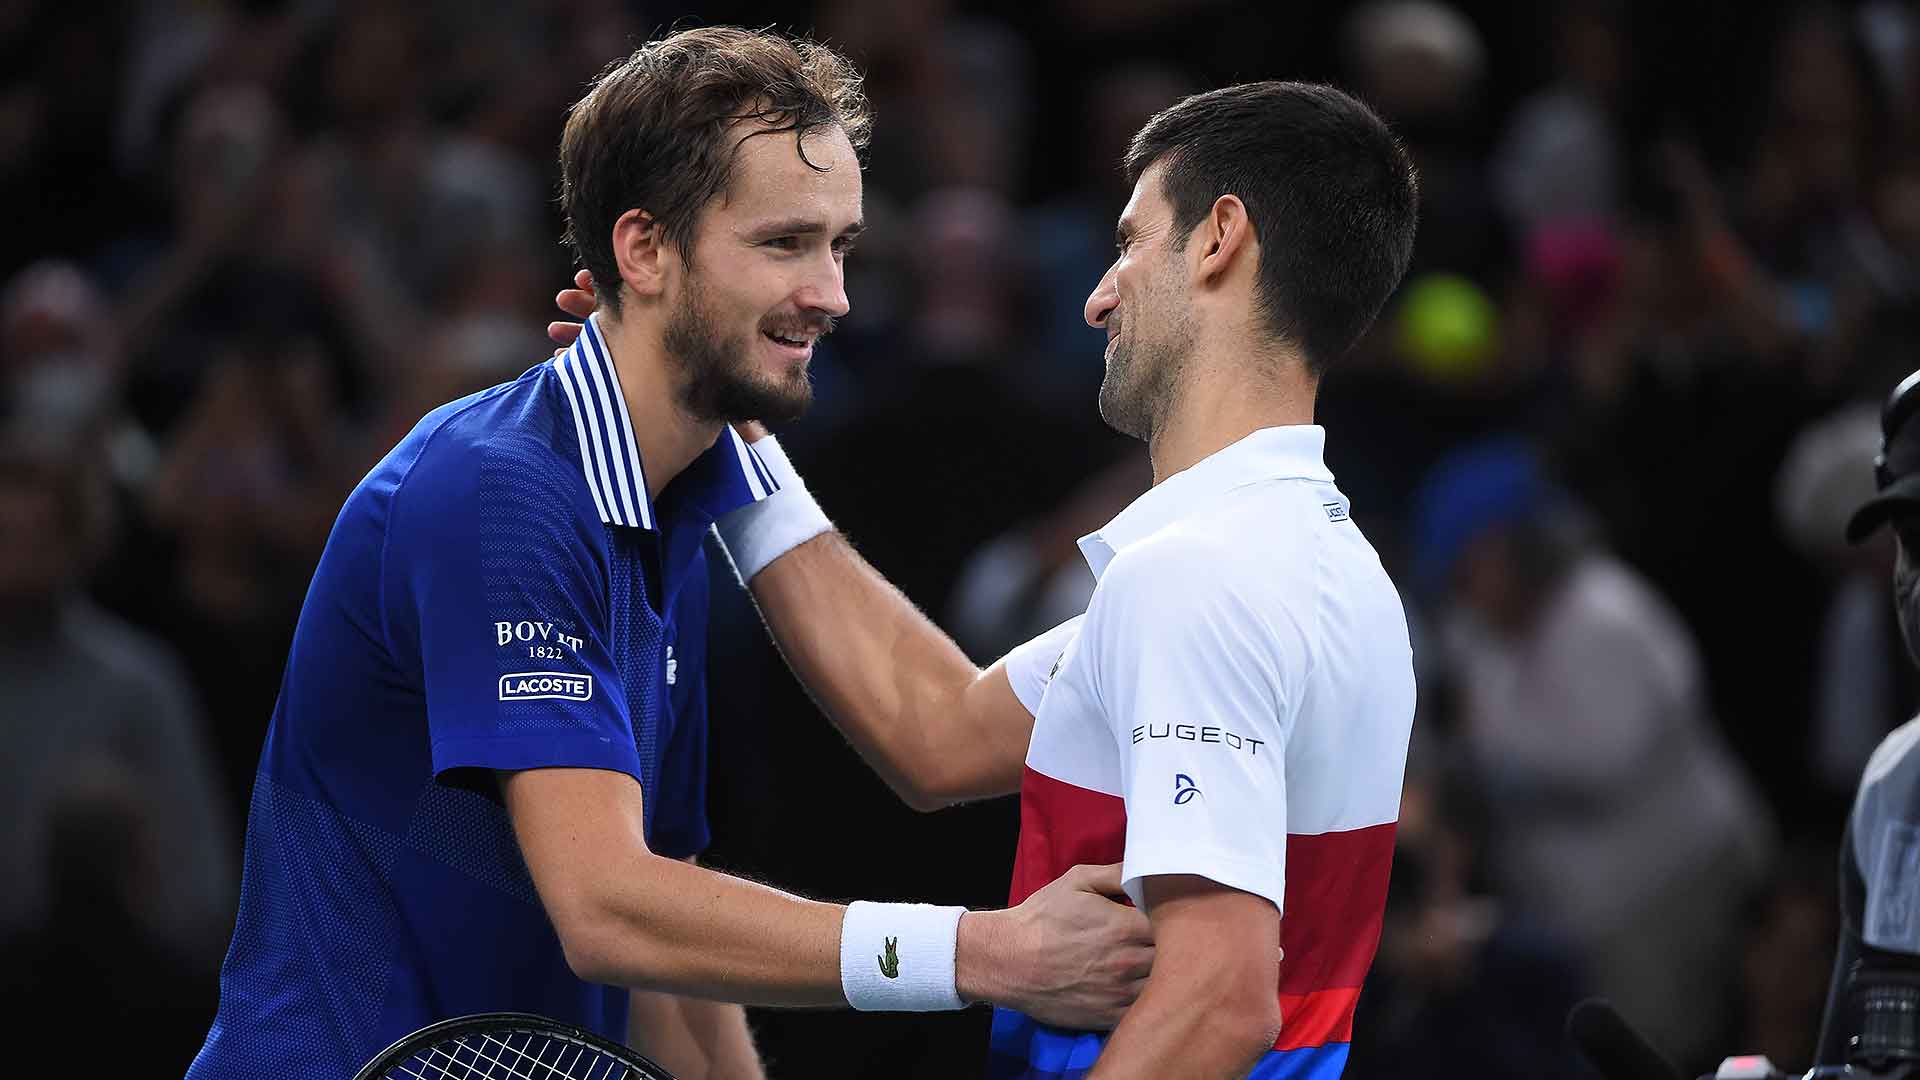 Daniil Medvedev falls to Novak Djokovic in the 2021 Paris final.